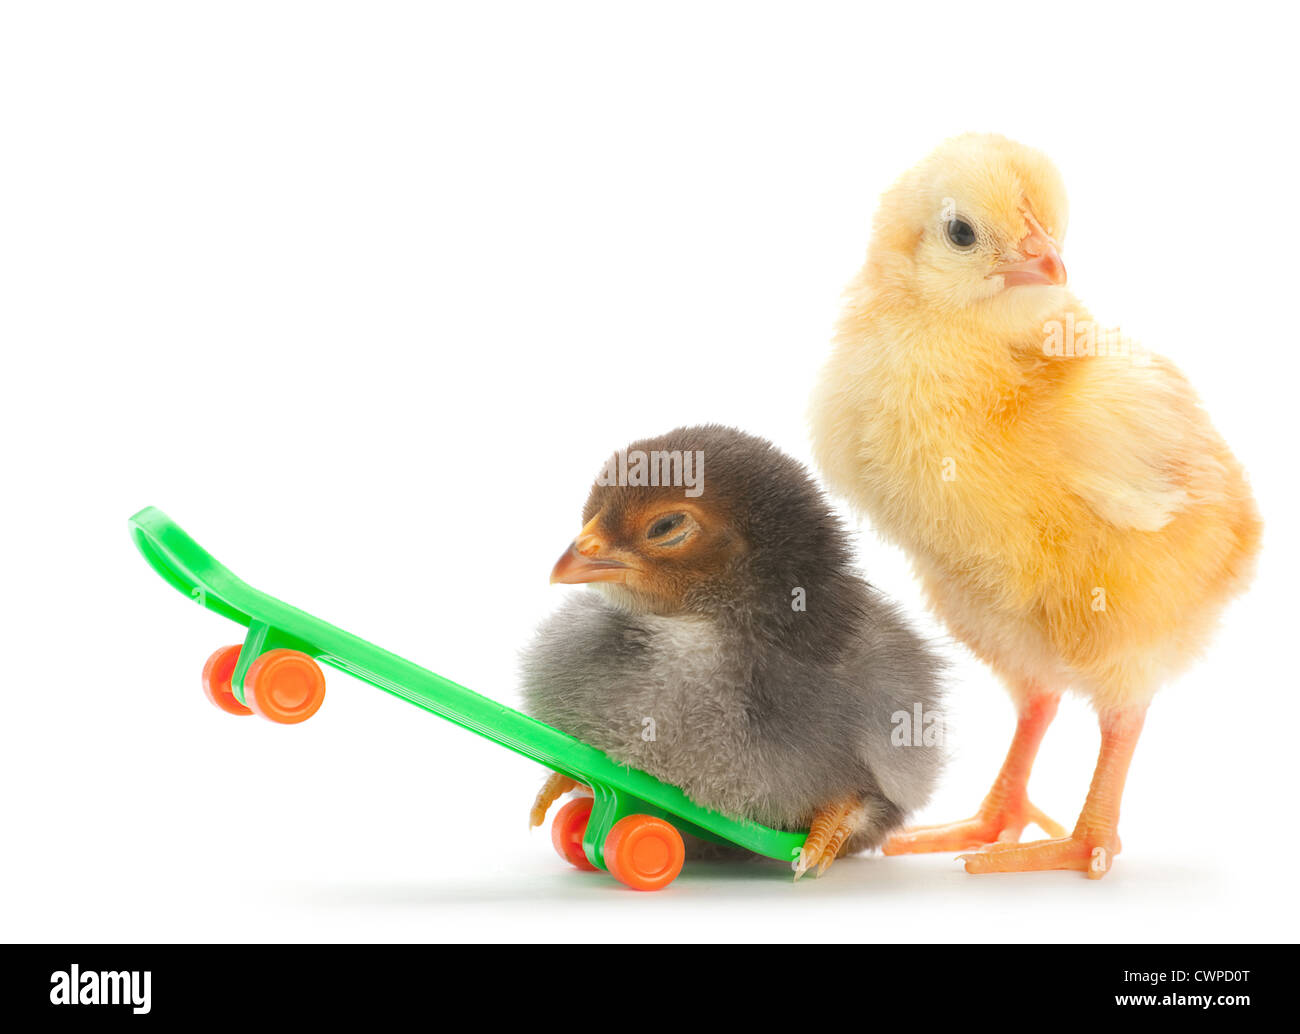 Baby chicken on skateboard isolated Stock Photo - Alamy